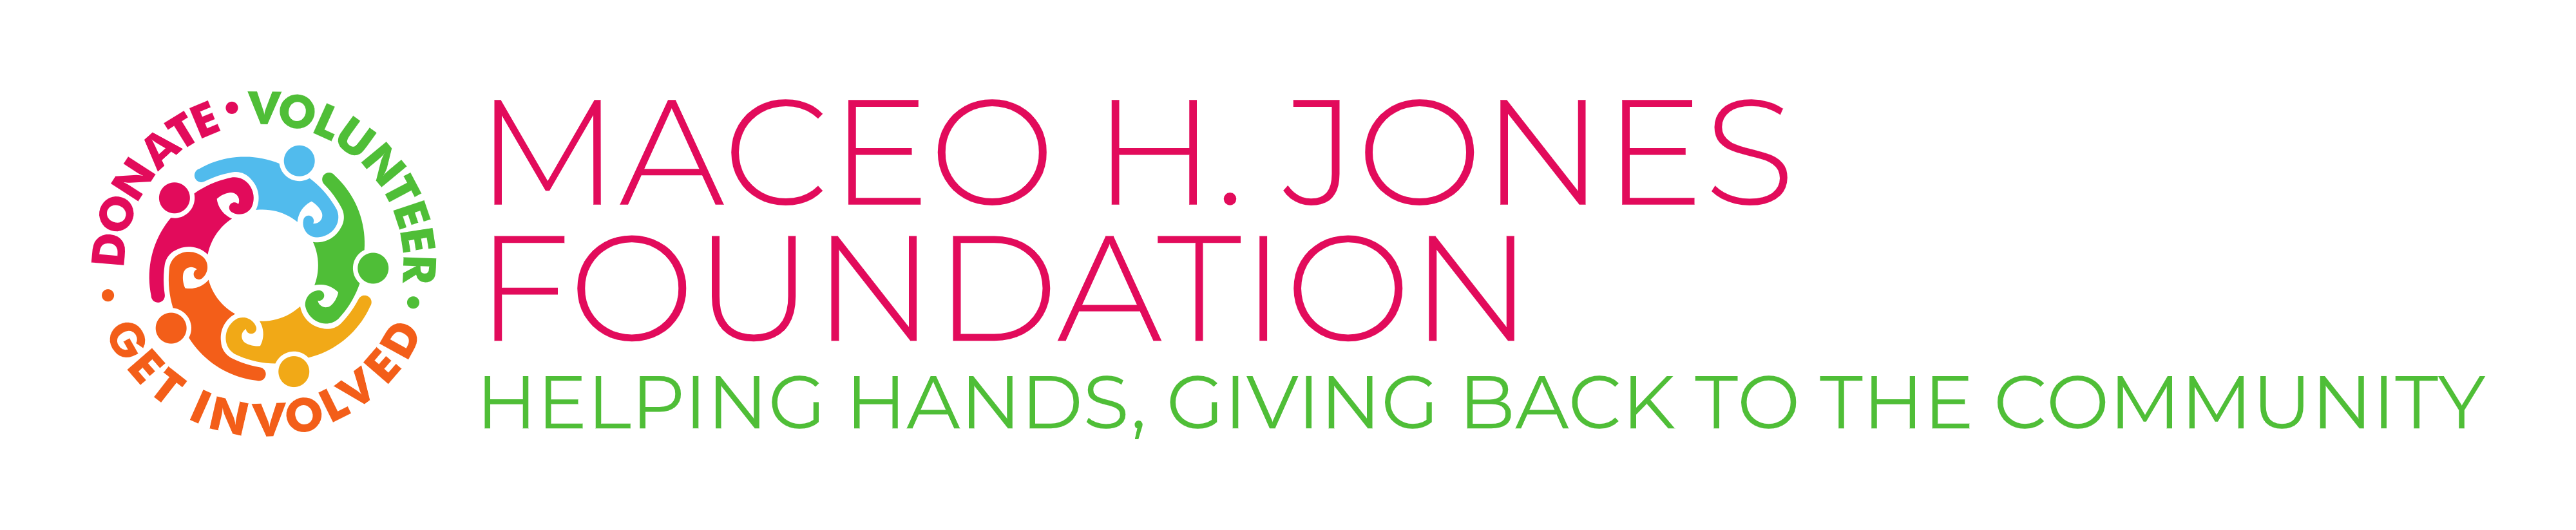 Maceo H. Jones Foundation